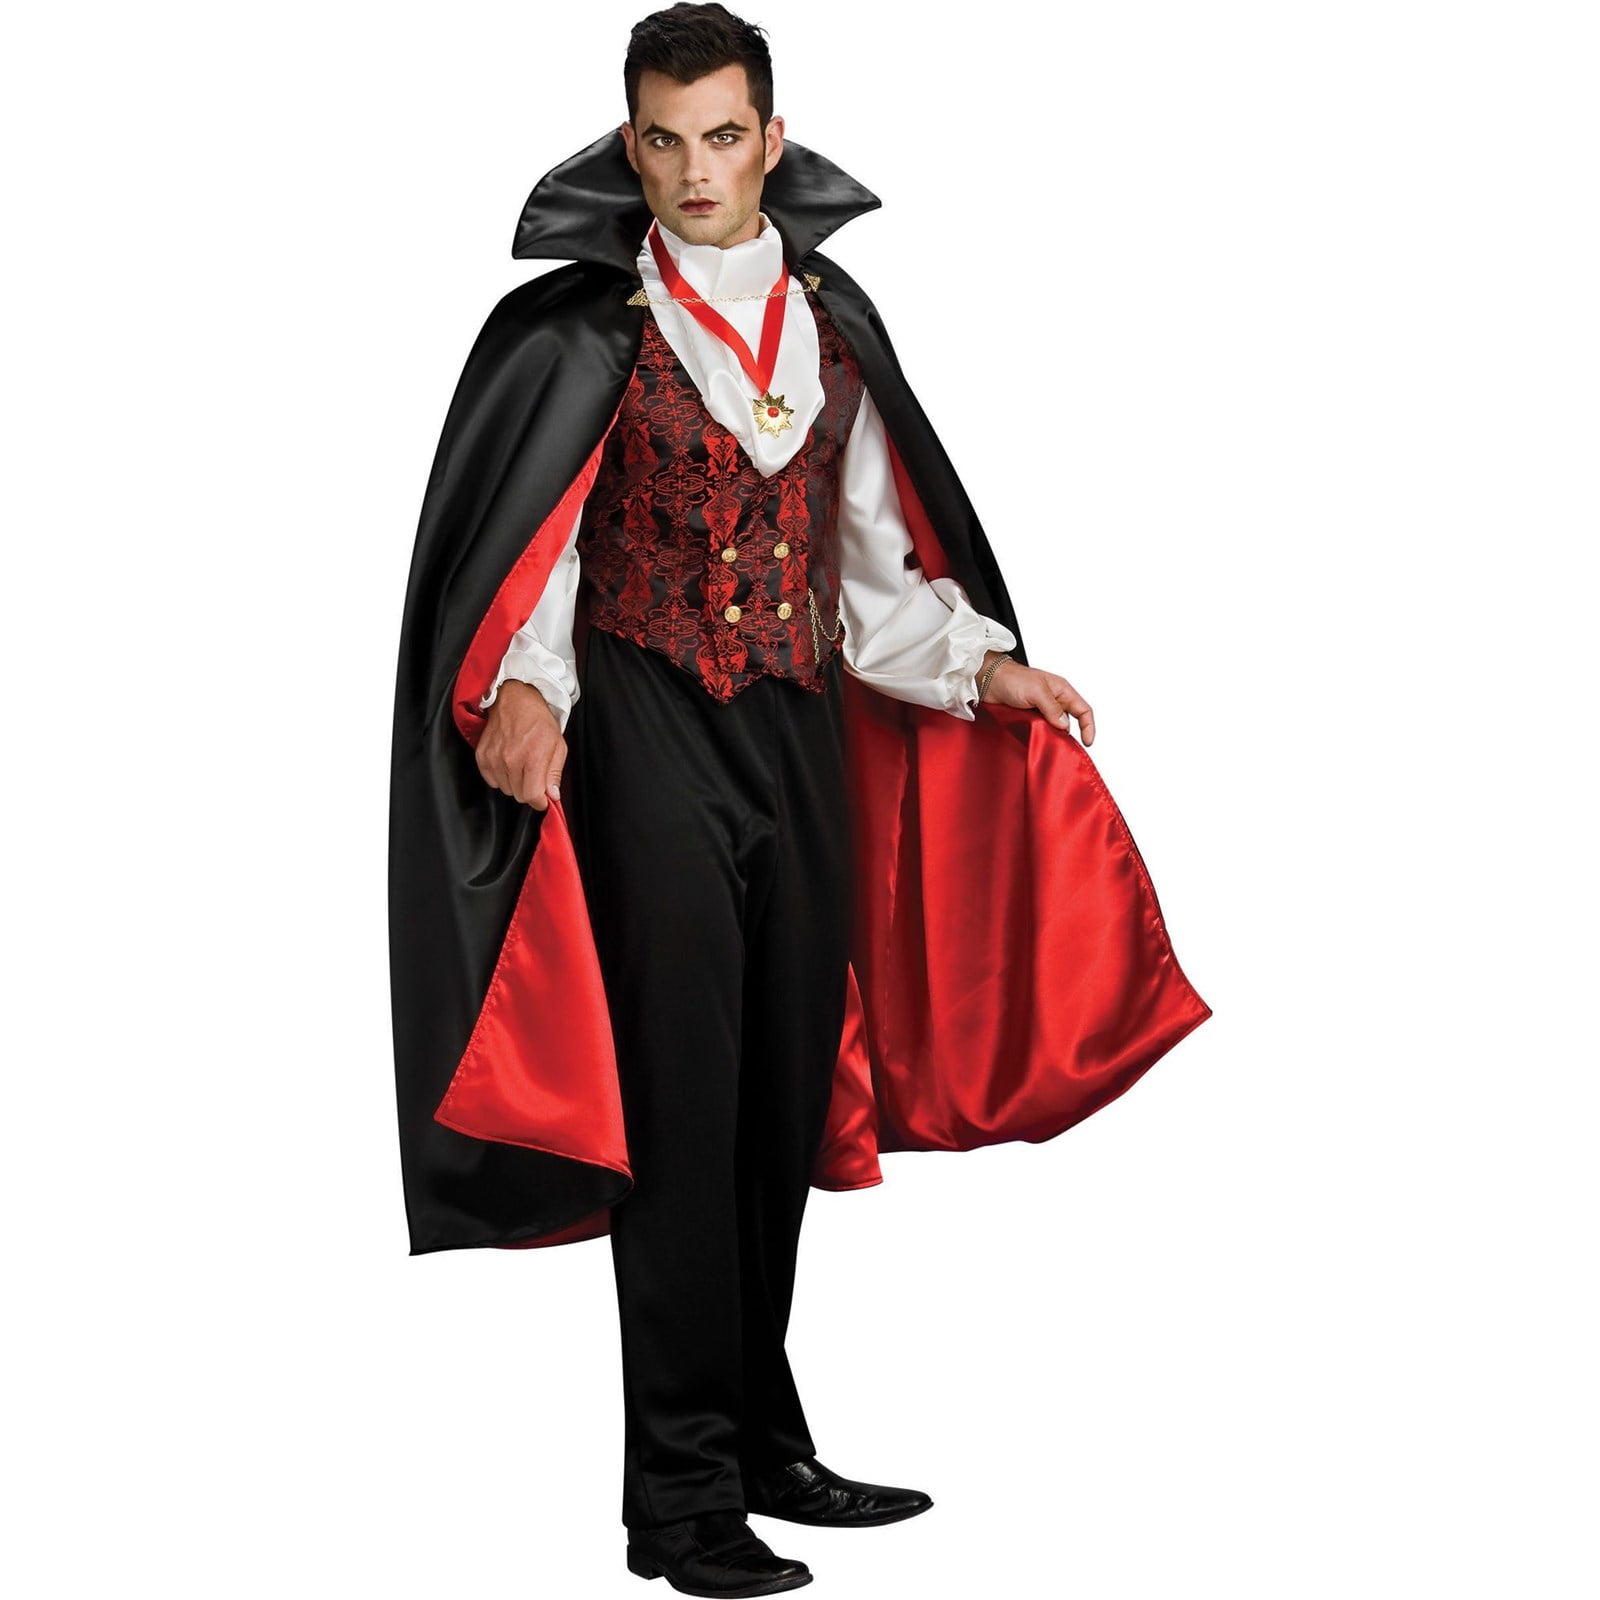 Transylvanian Vampire Costume for Men - Walmart.com - Walmart.com